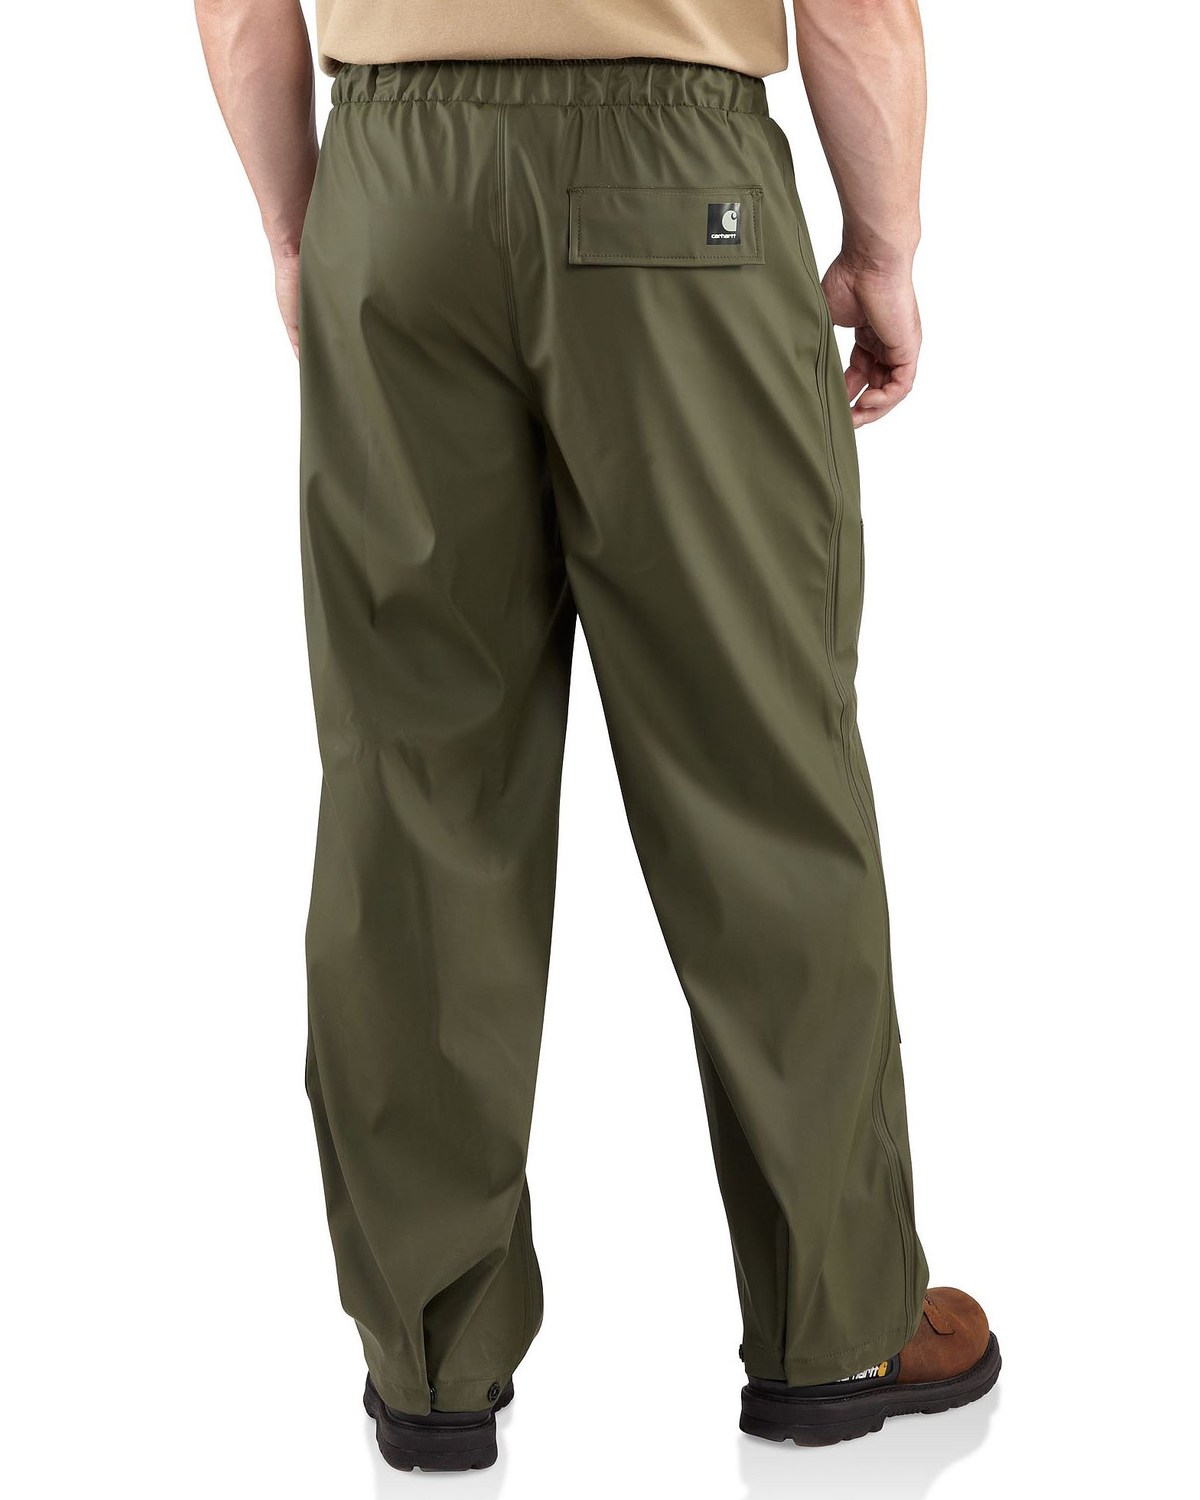 olive green carhartt pants